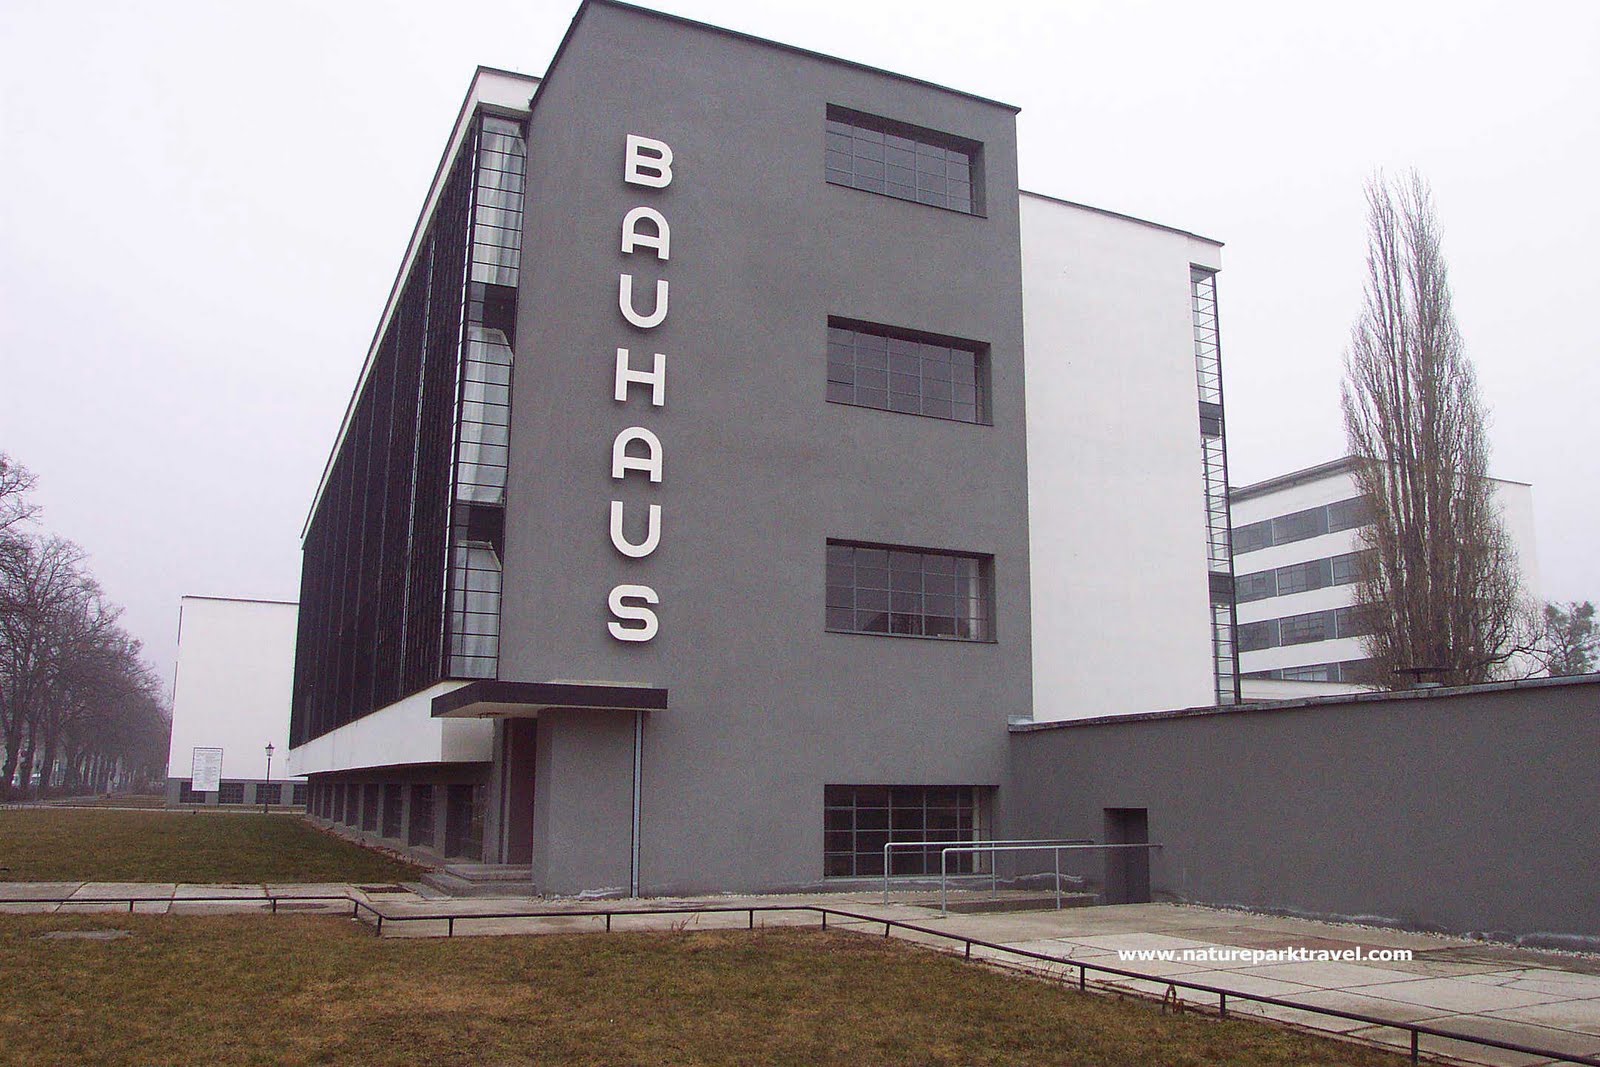 Mason's Design: Bauhaus' Inspiration